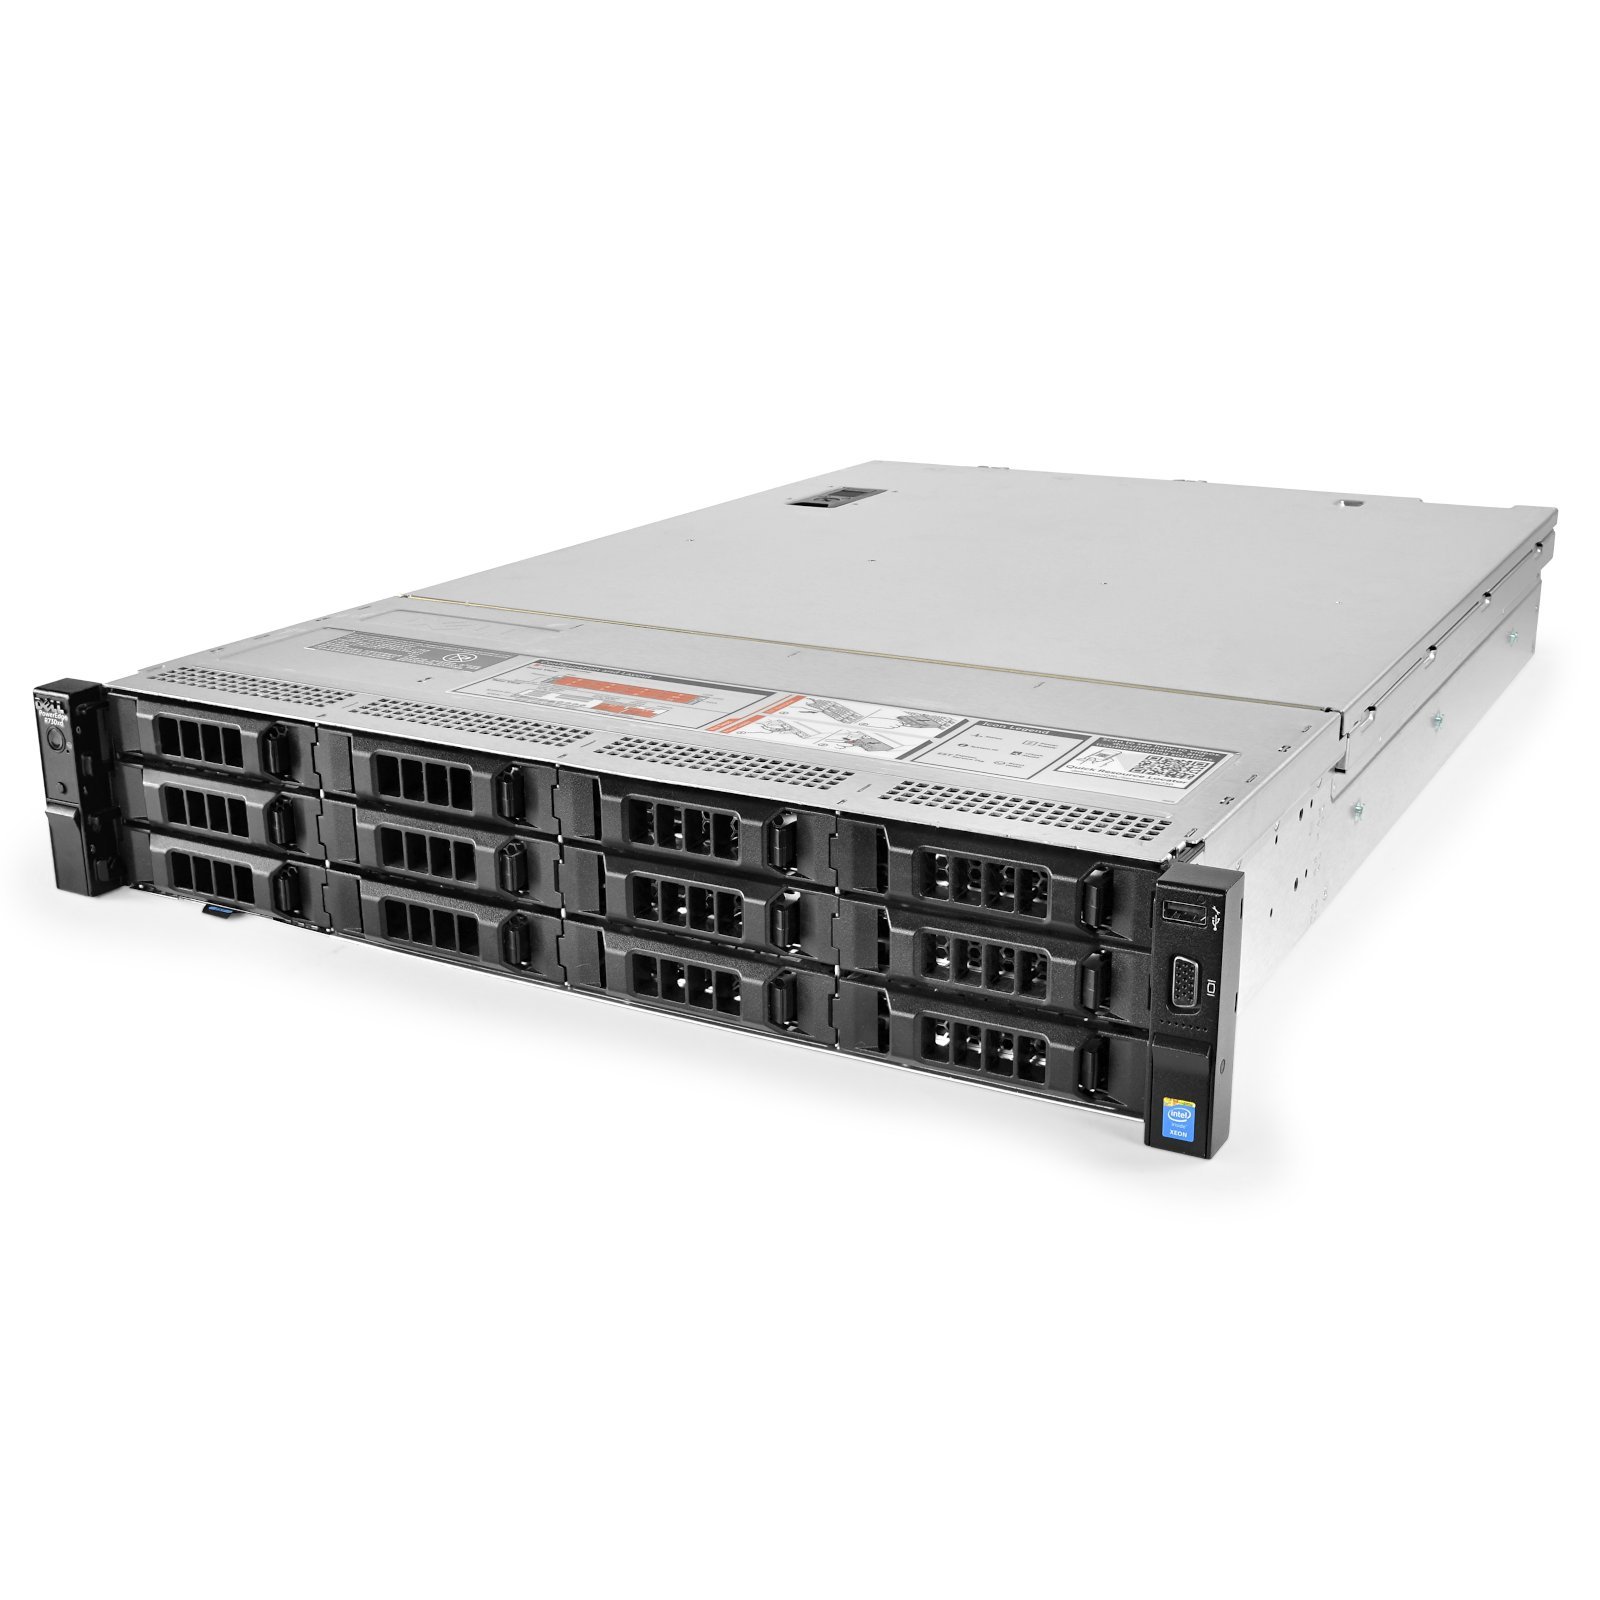 Подробное фото Сервер DELL PowerEdge R730XD 2x Xeon E5-2683v3 64Gb 2133P DDR4 12x noHDD 3.5" SAS RAID Perc H730 mini, 1024Mb, 2*PSU 750W